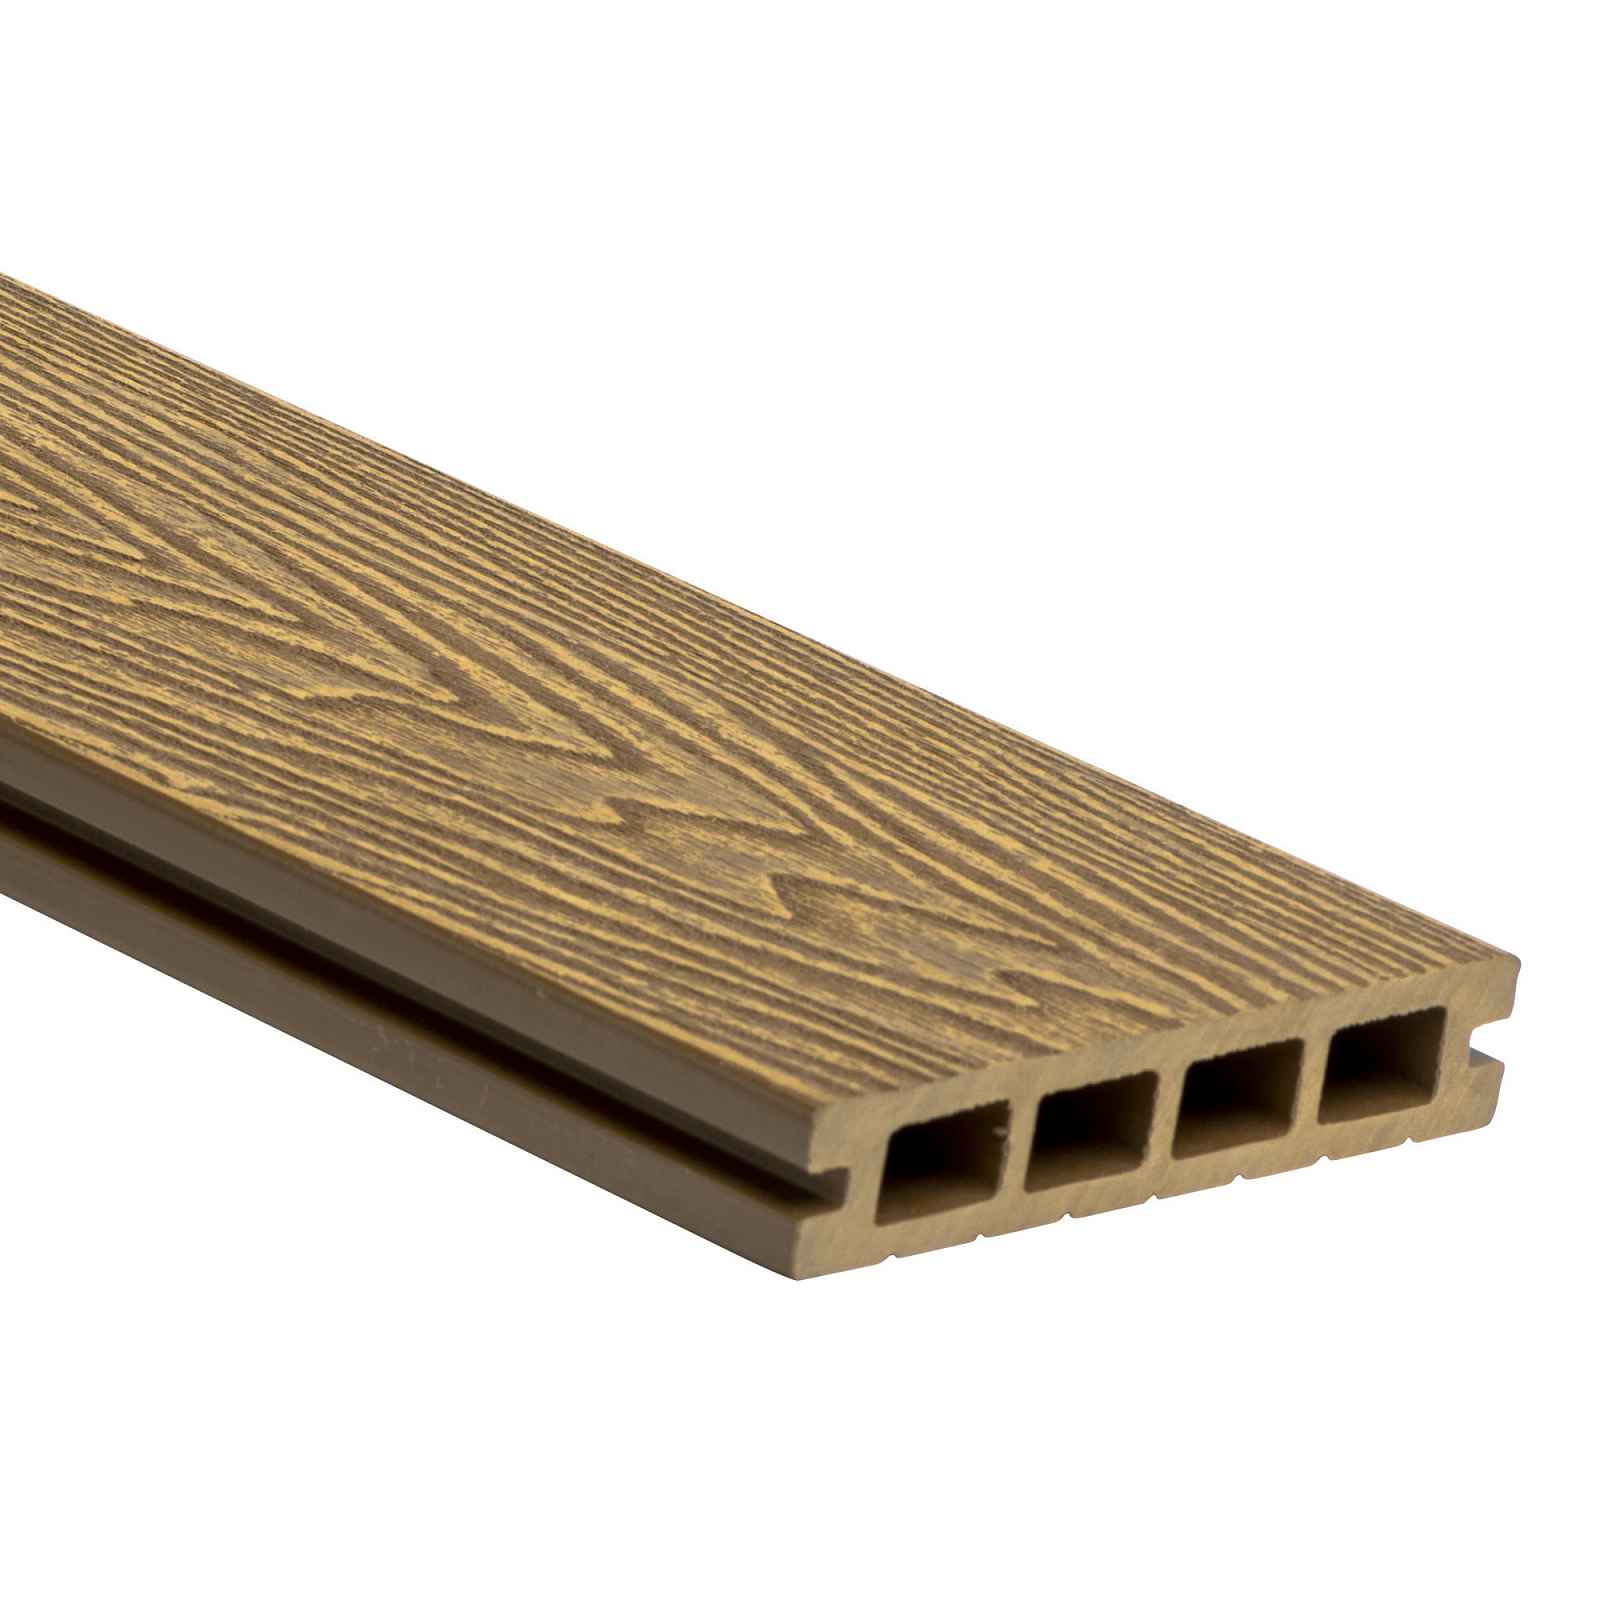 Prkno terasové dřevoplastové WPC PERI 3D duté odstín original wood 136×25×2900 mm